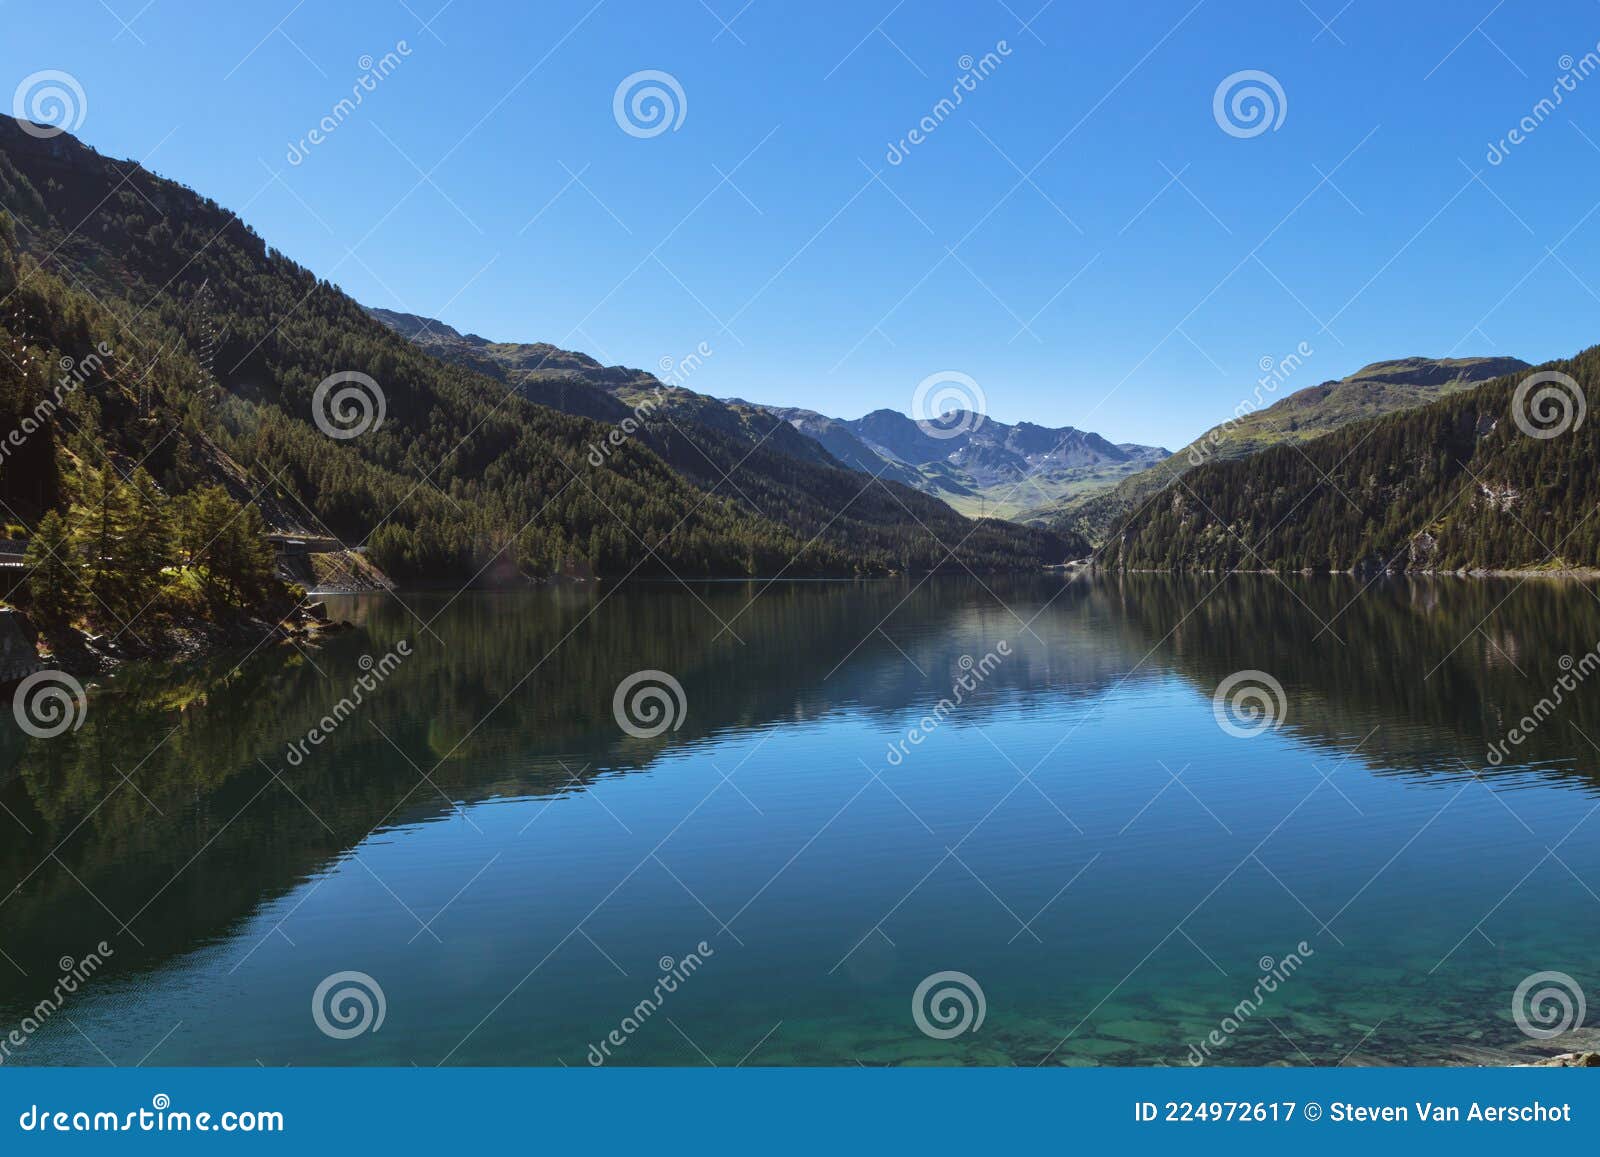 marmorera lake in summer, julier pass, grisons, switzerland